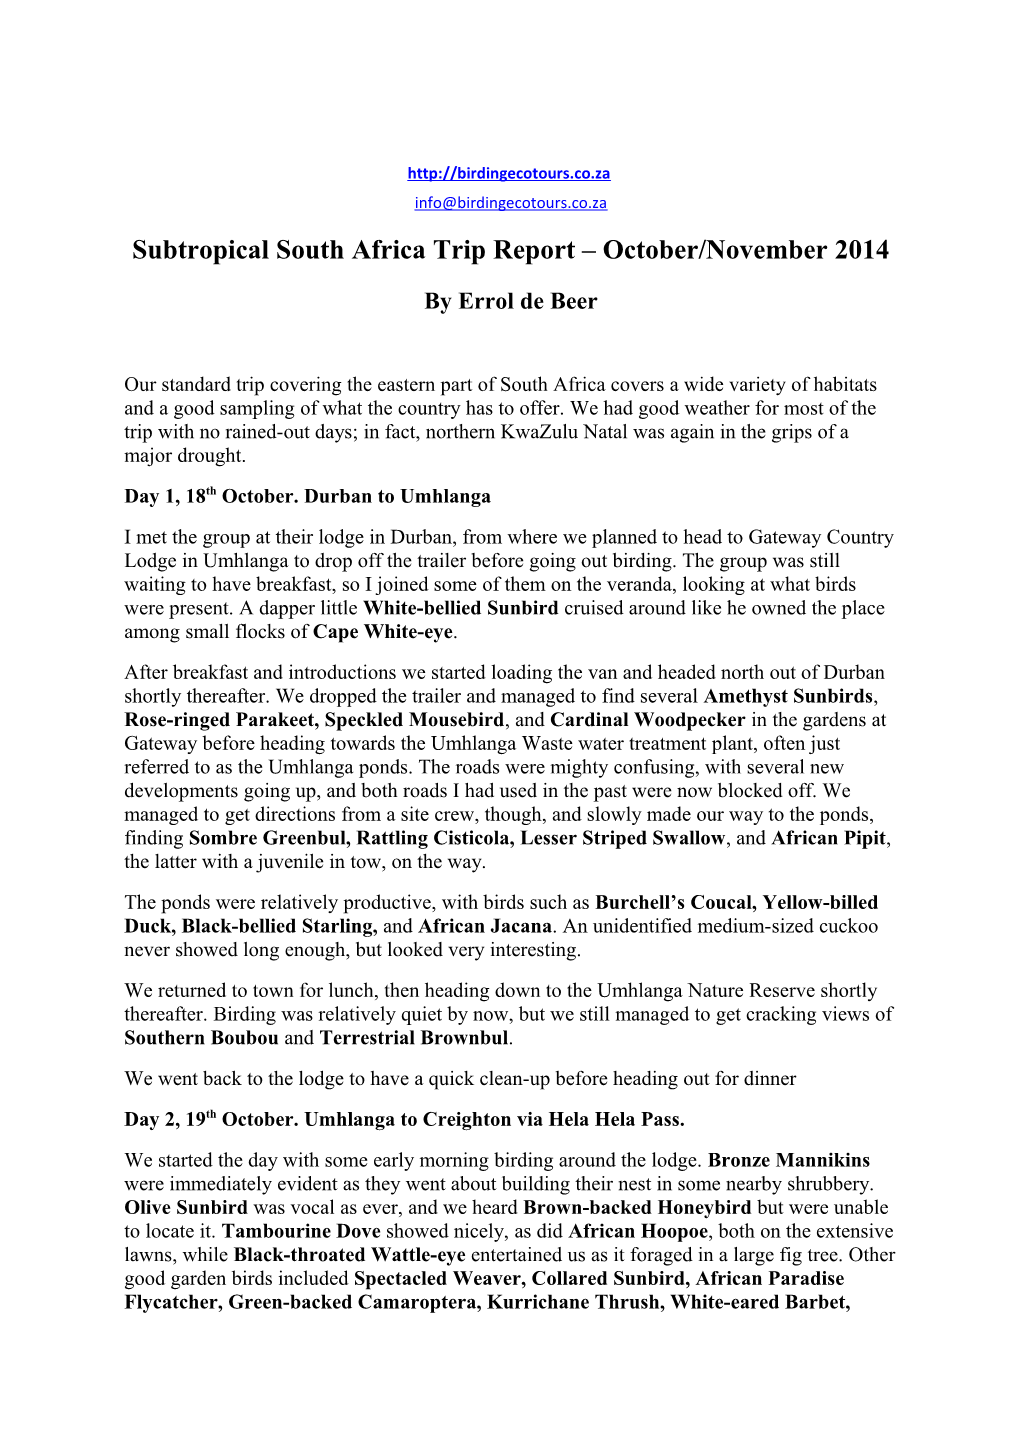 Subtropical South Africa Trip Report October/November 2014